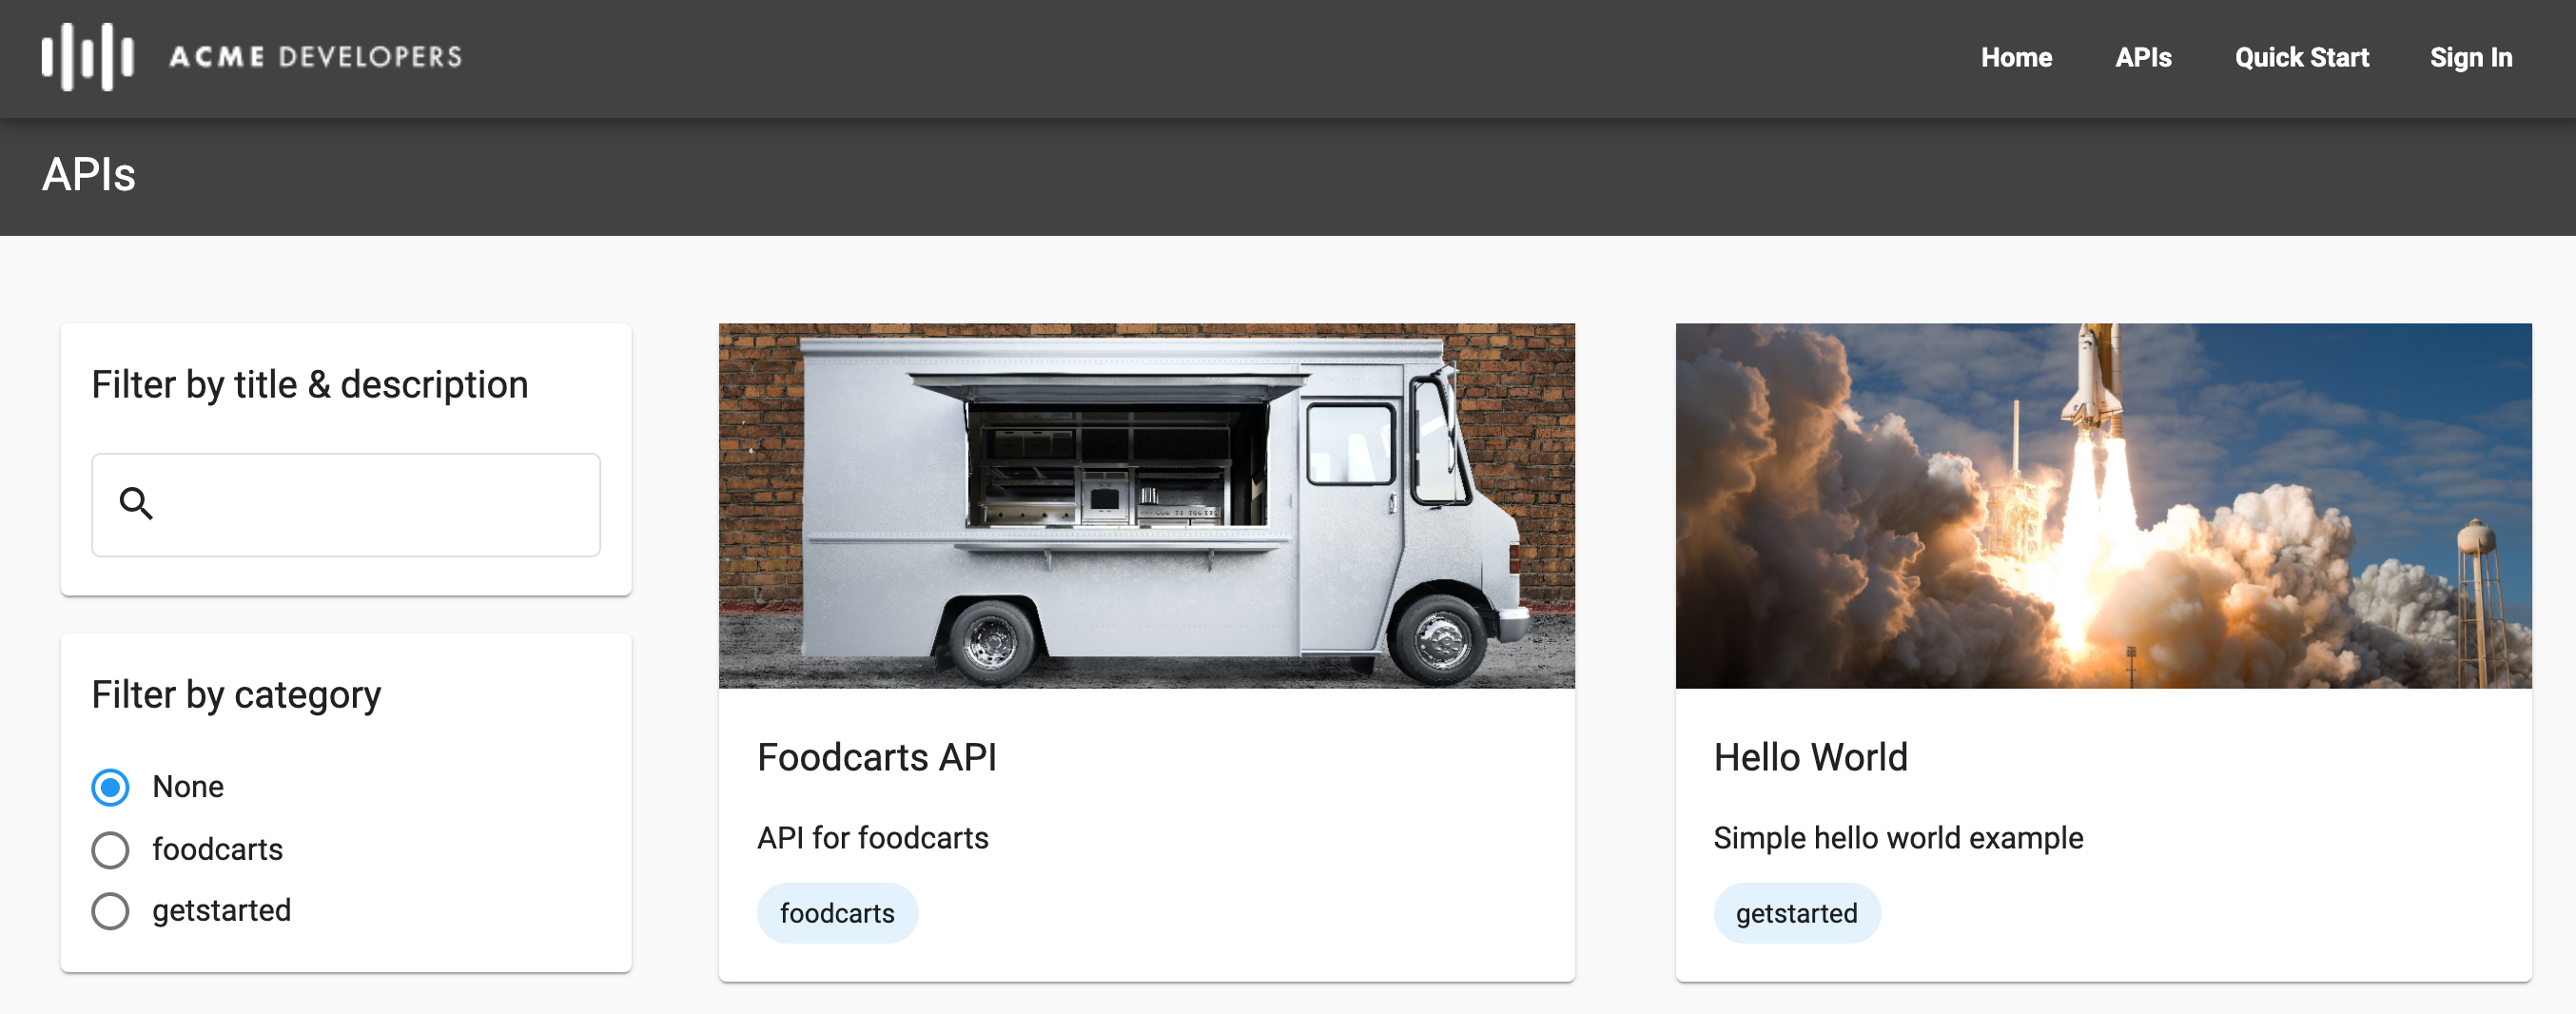 Halaman API di portal langsung yang menampilkan dua kategori dan penggunaan gambar